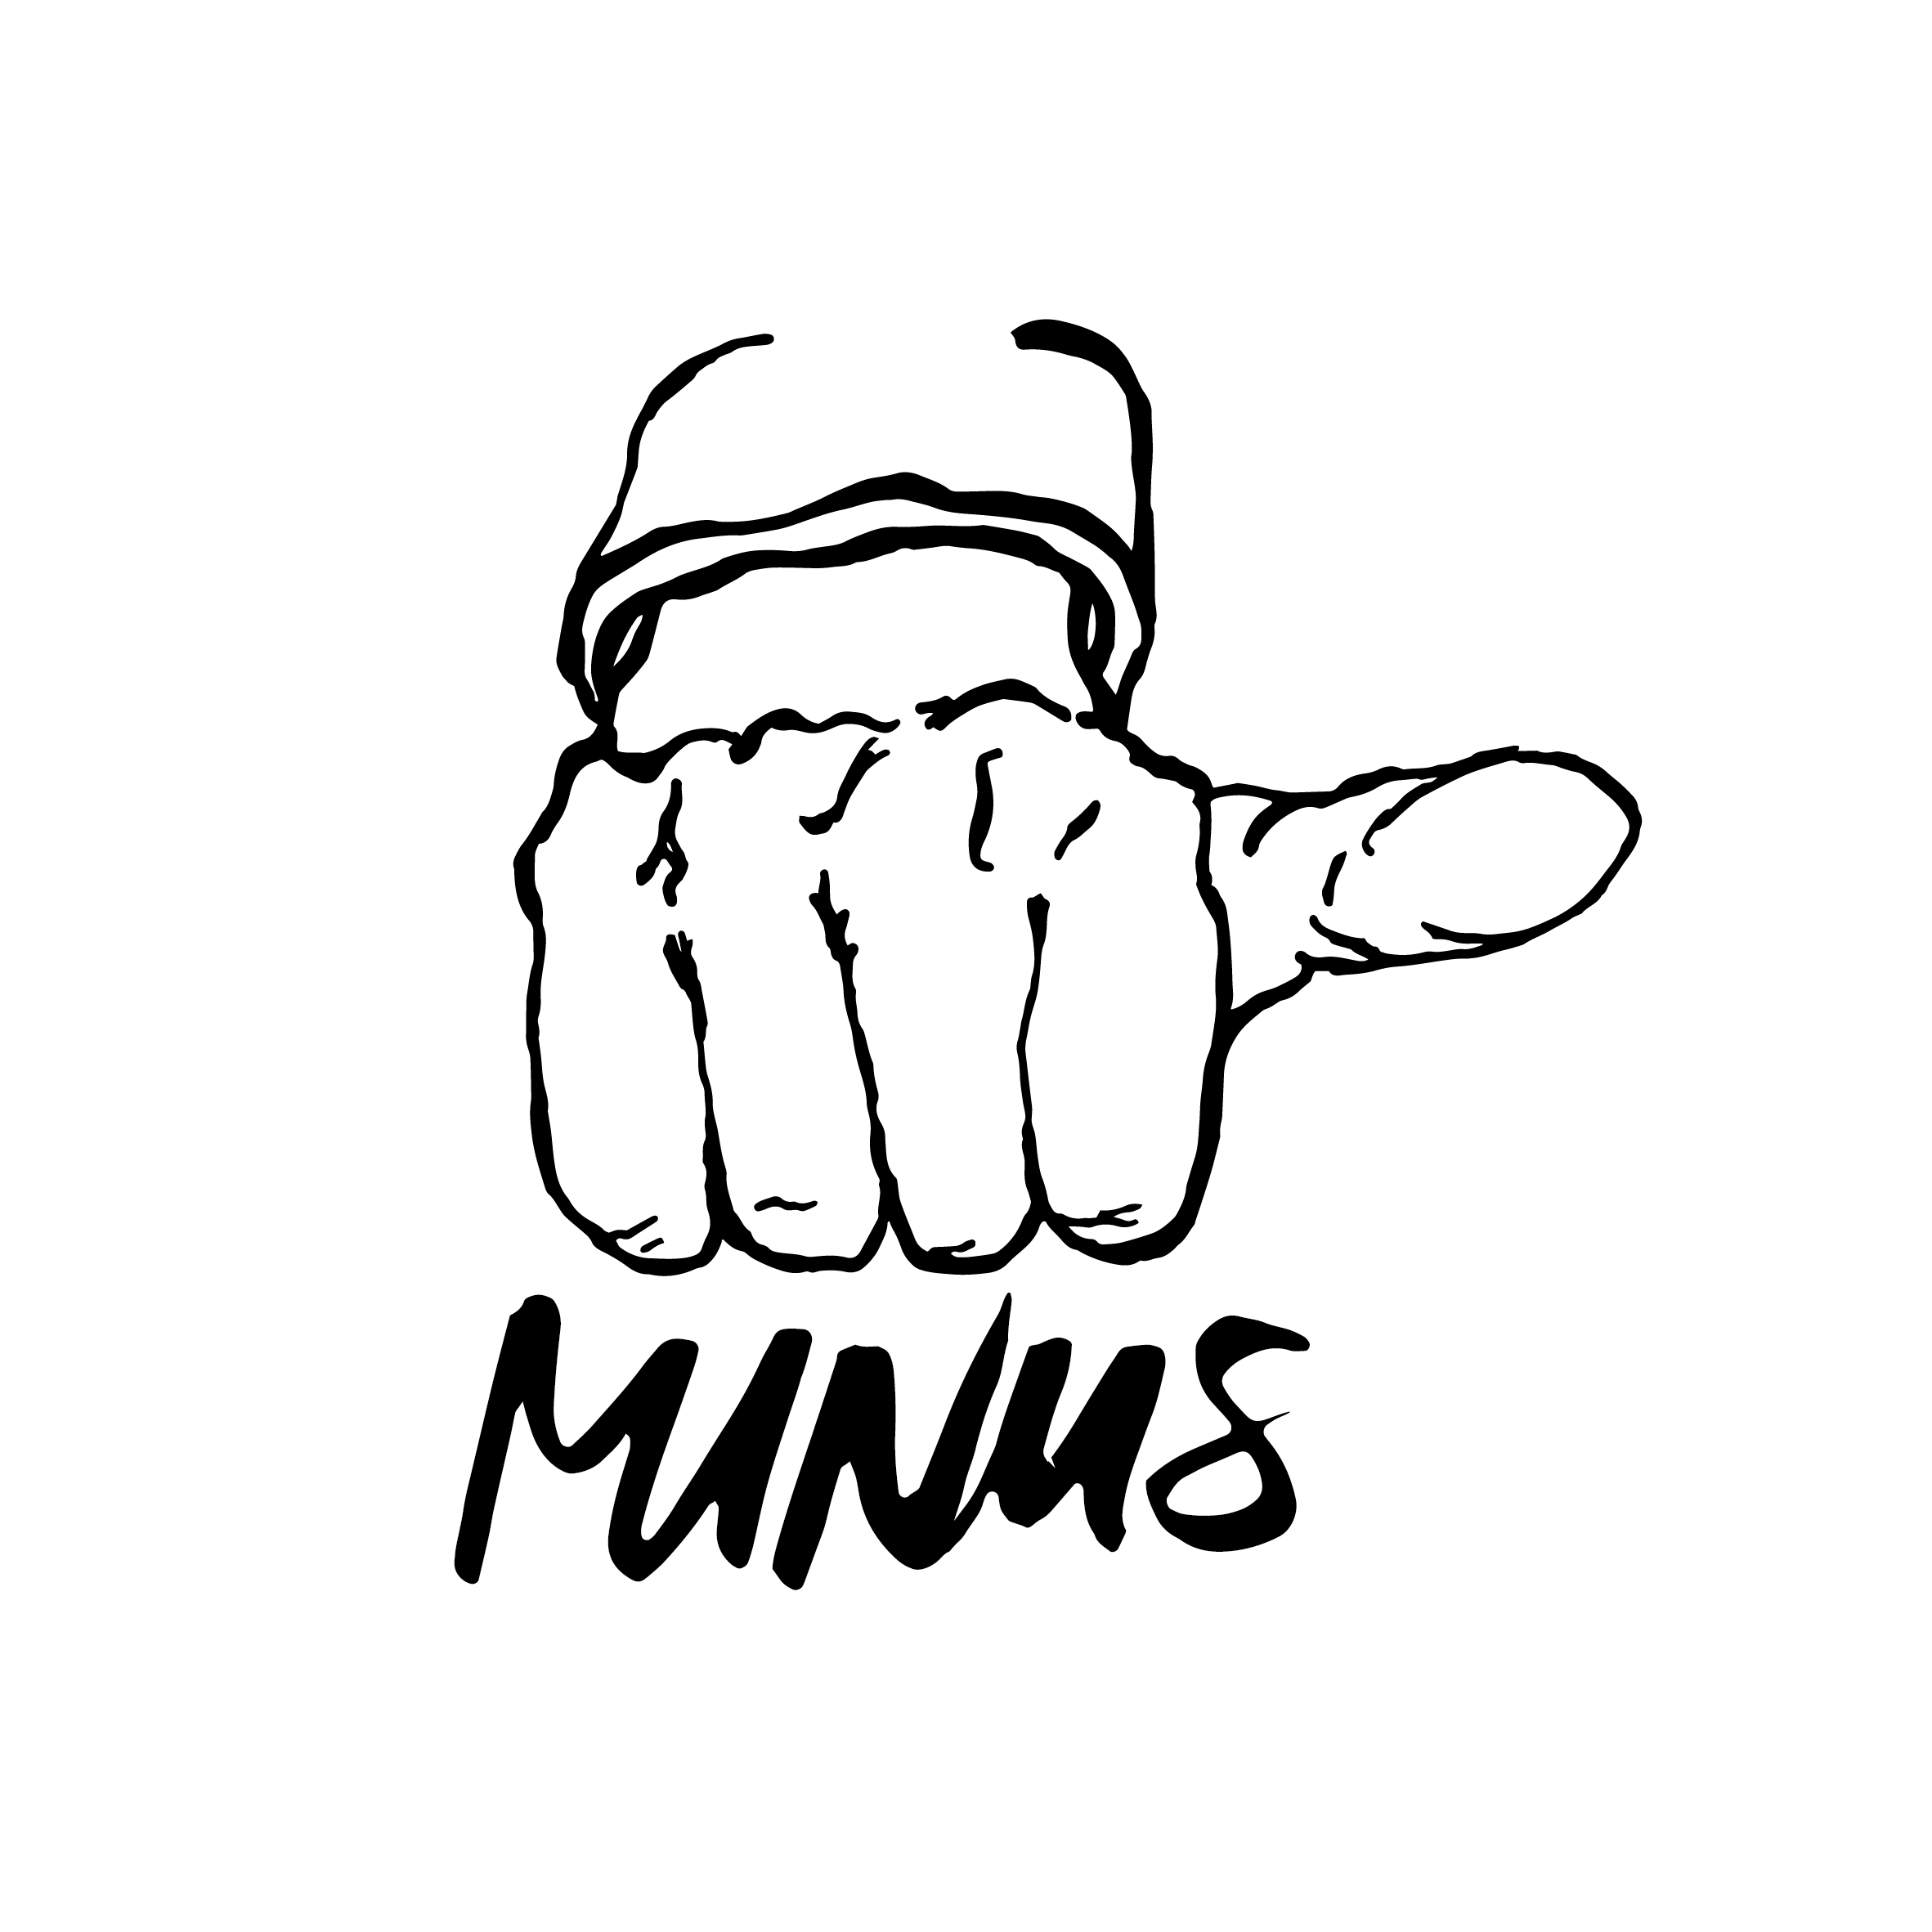 Minus_5